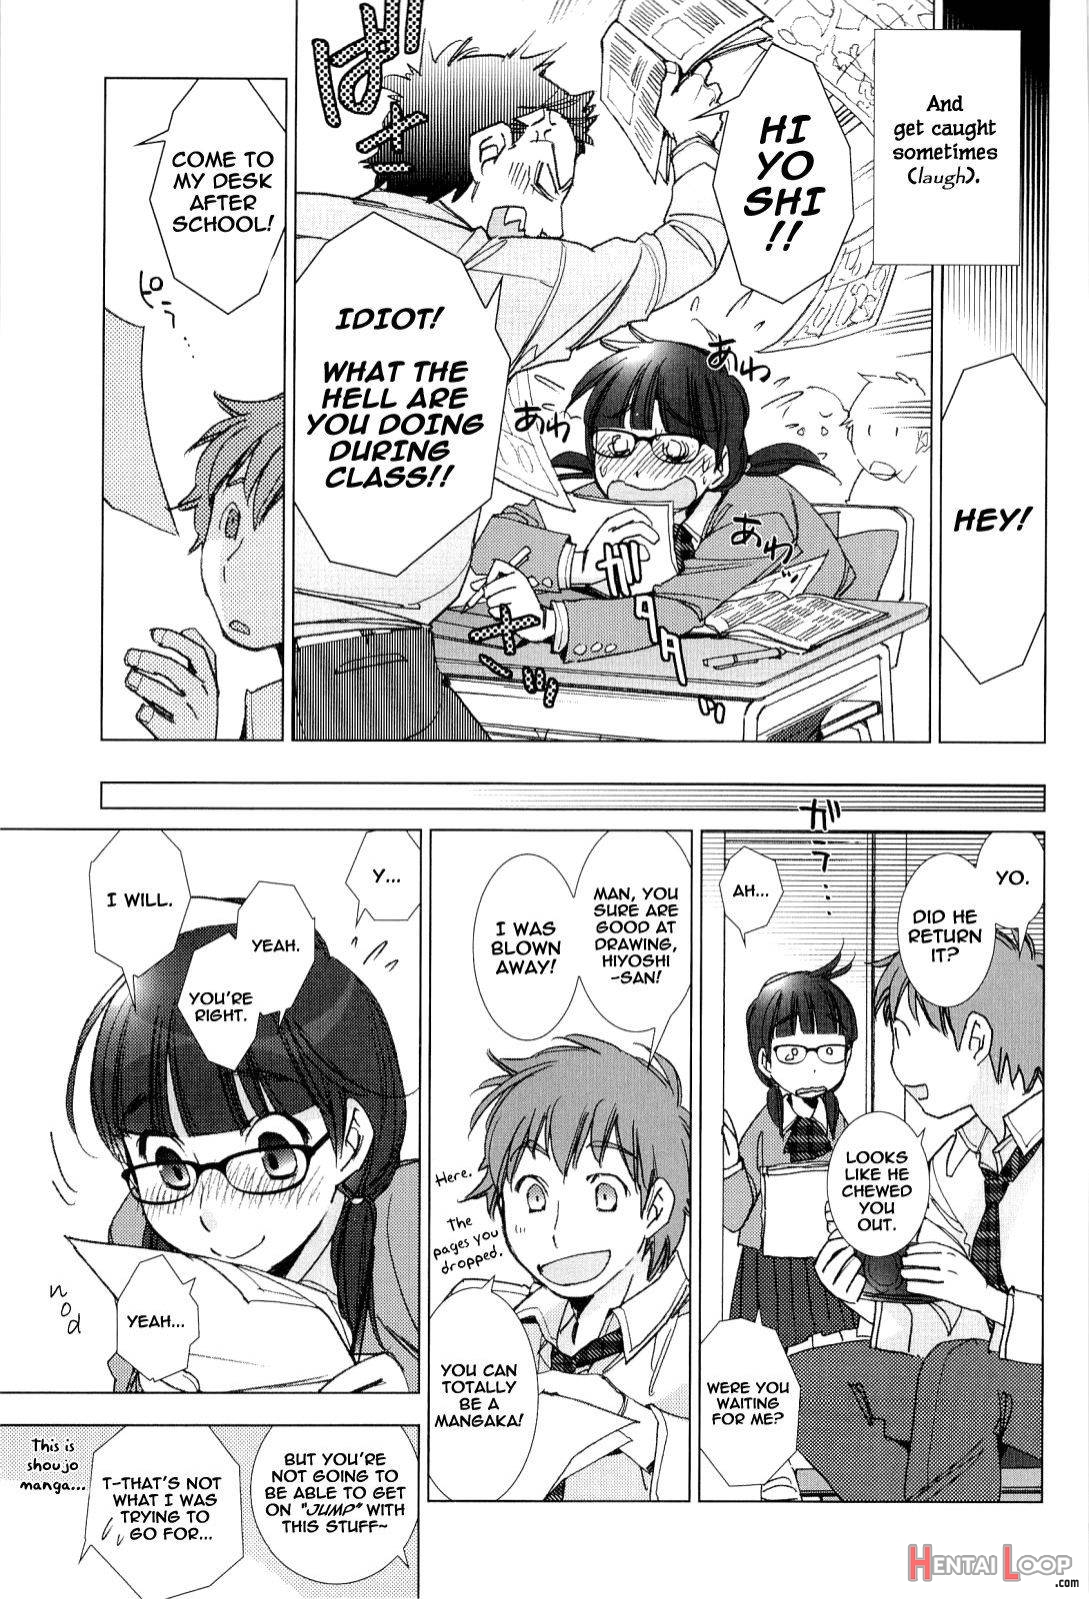 Tanmachi-kun and Hiyoshi-san page 4